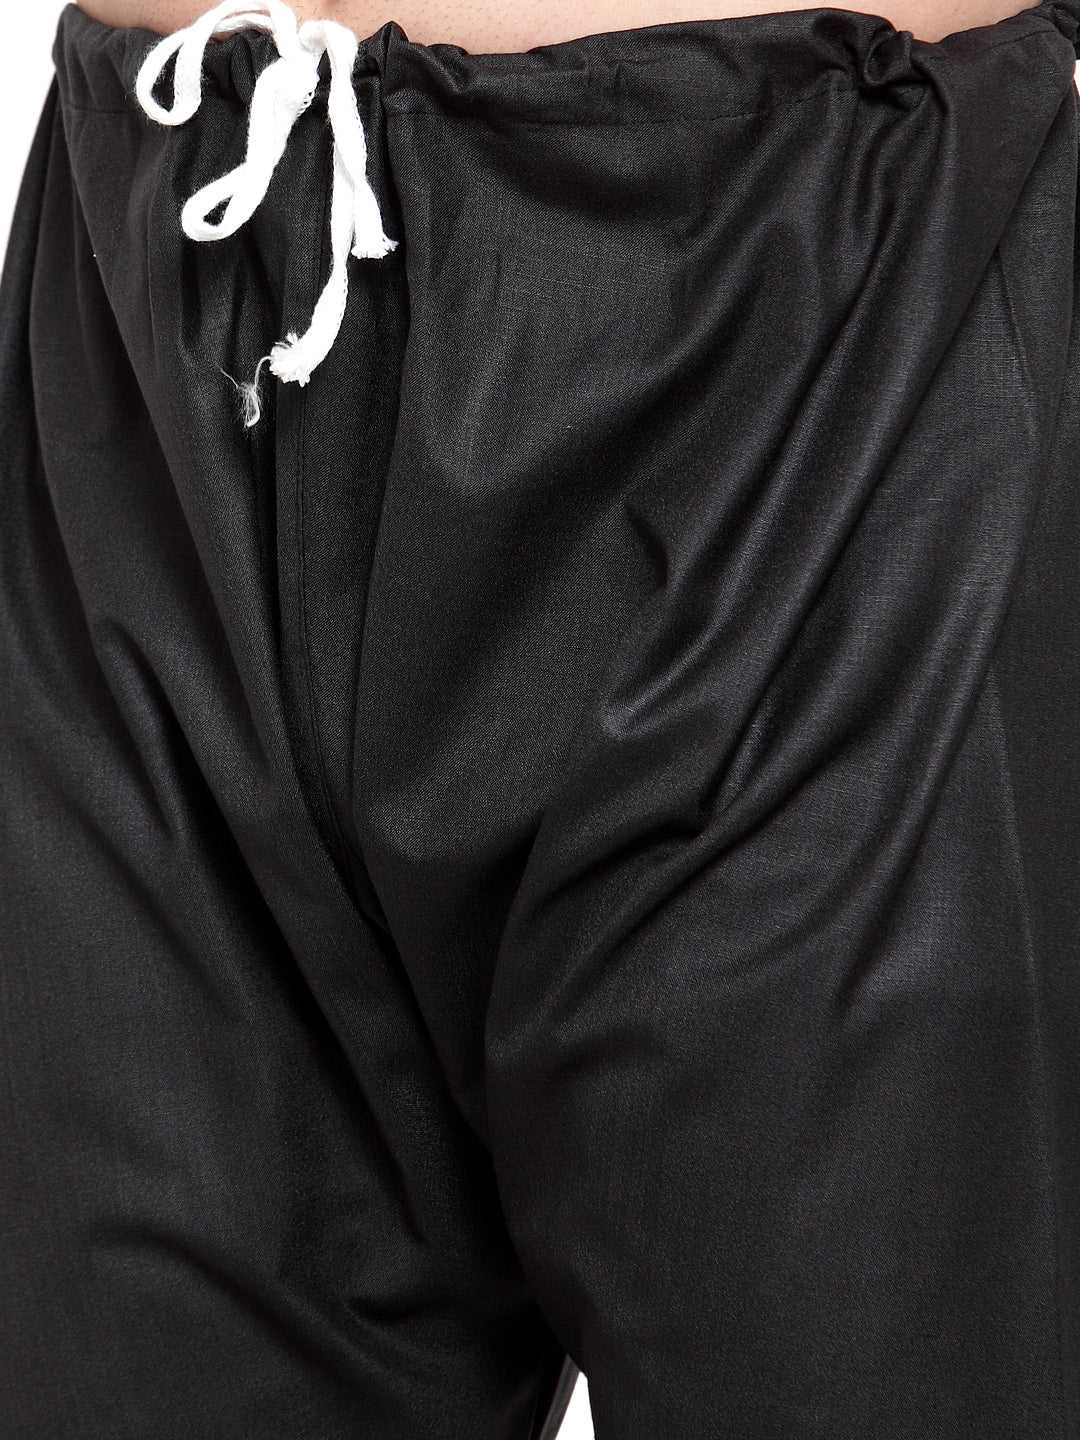 Men's Solid Cotton Kurta Pajama with Printed Waistcoat ( JOKP WC 4061 Purple-B ) - Virat Fashions